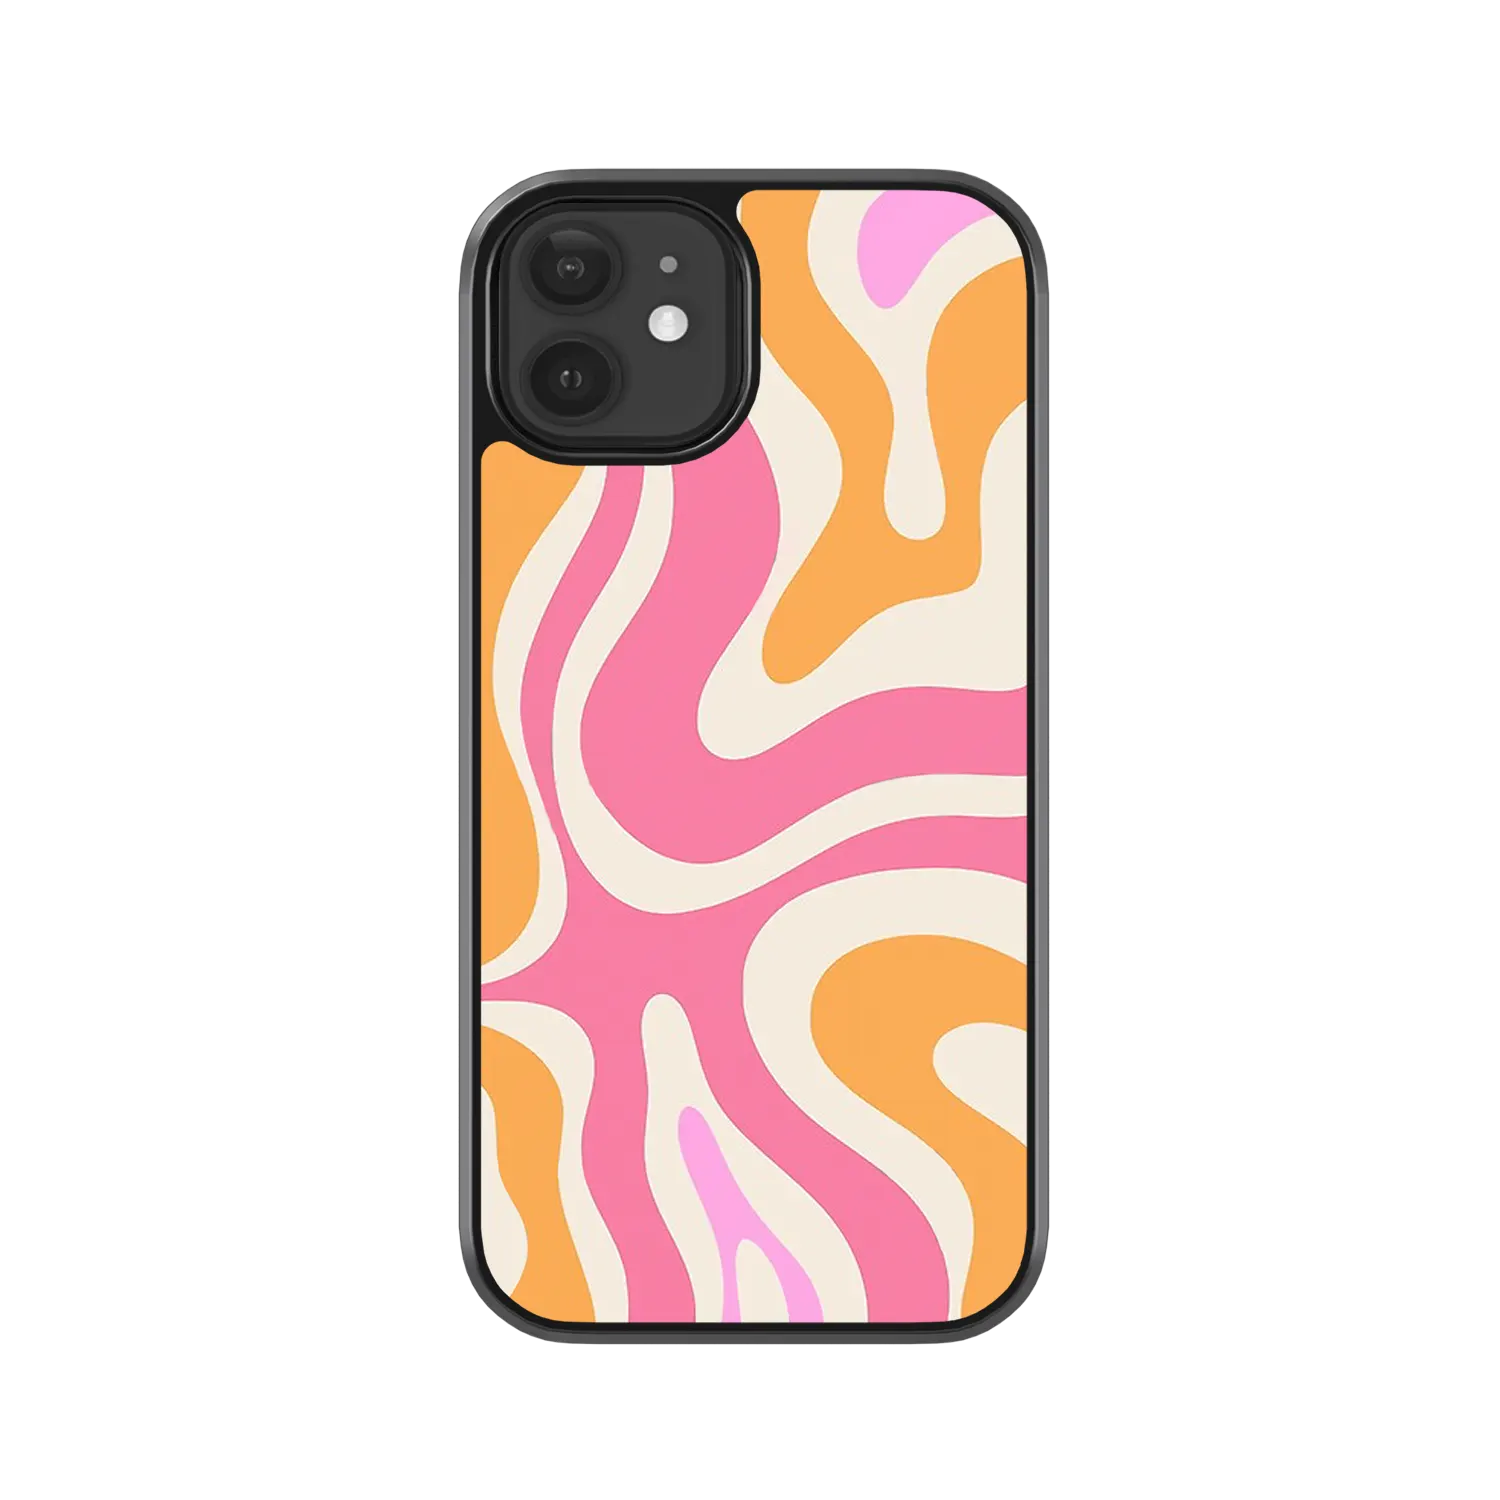 Aloha iPhone 11 Case